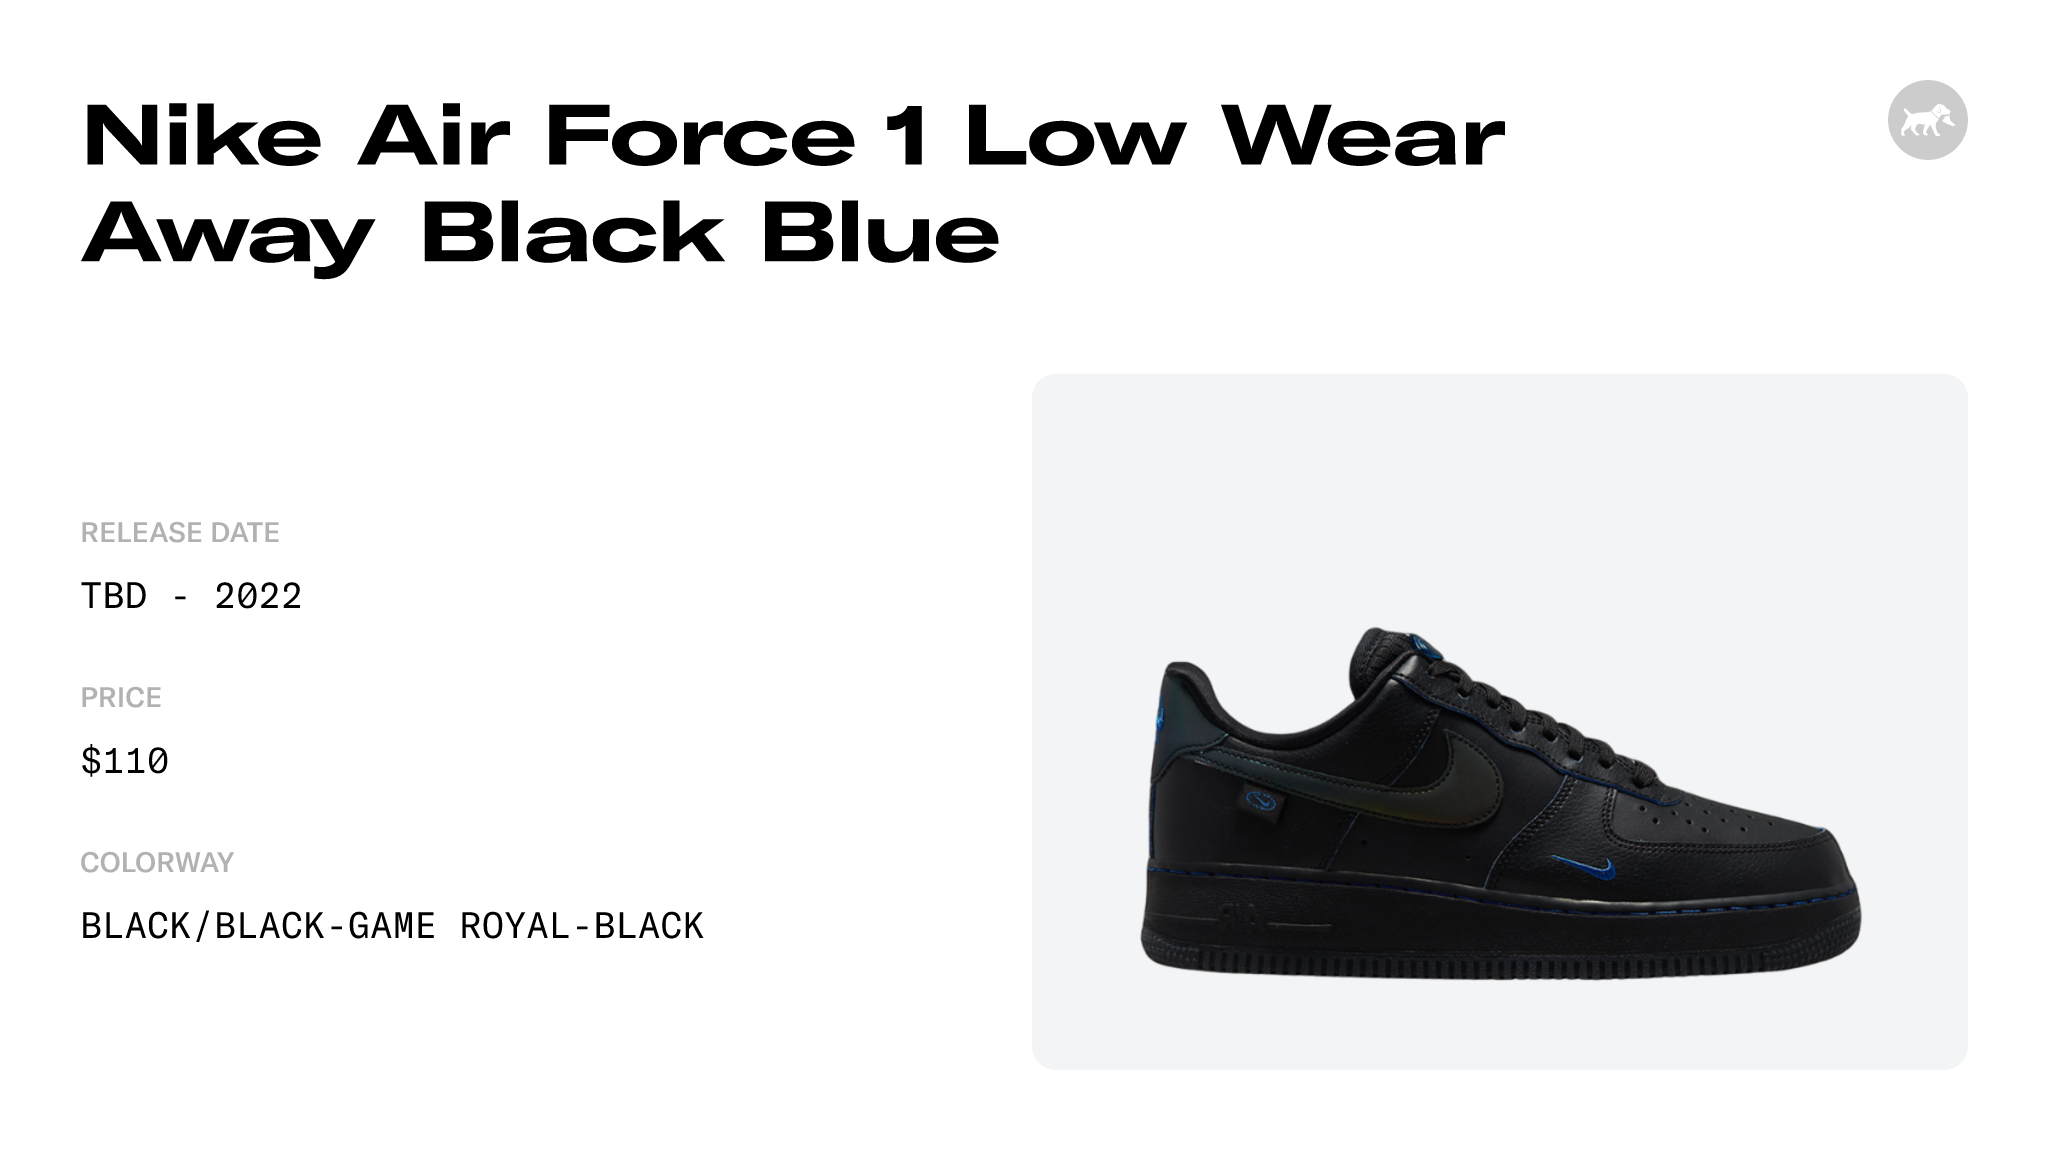 Nike Air Force 1 Low Worldwide Black FB1840-001